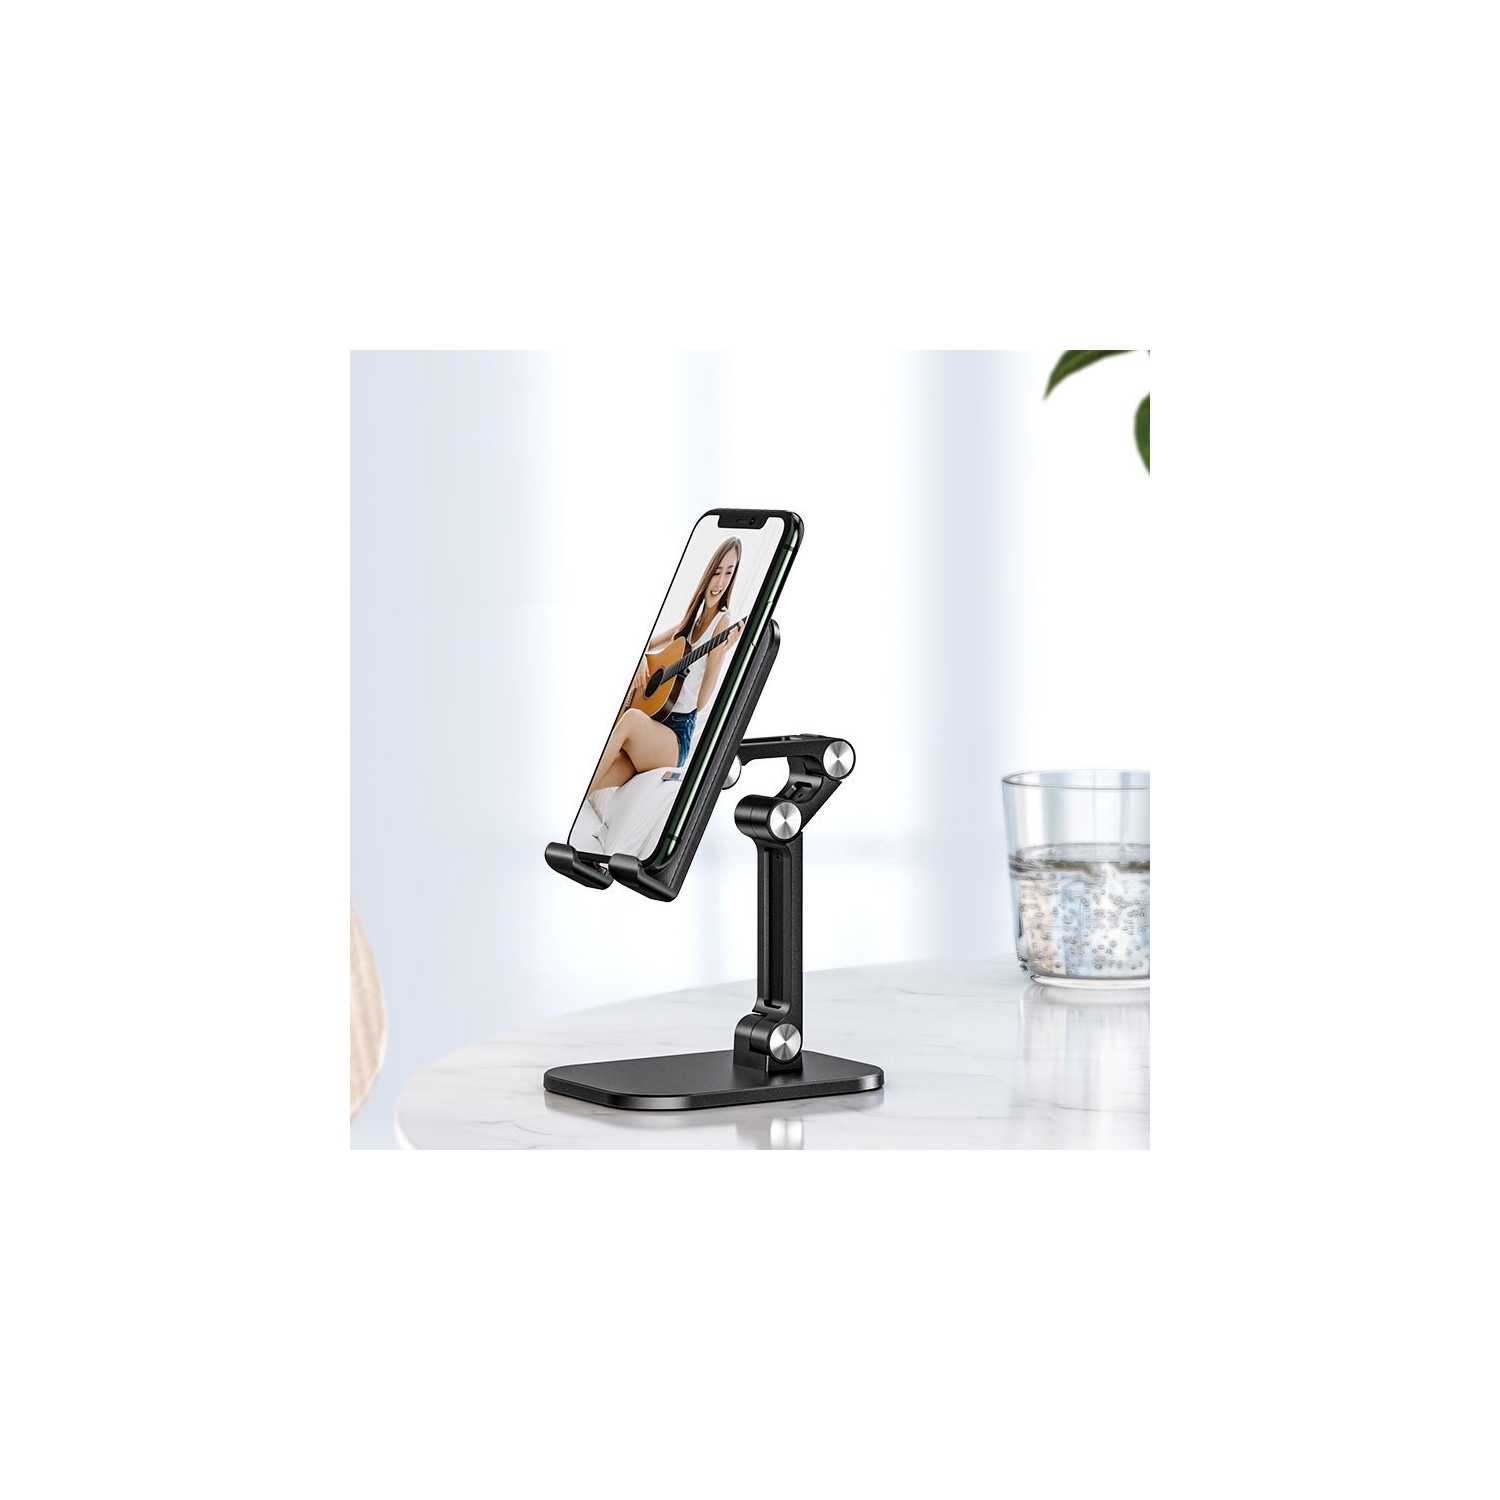 360 Rotating Tablet Desk Stand Flexible Cellphone Holder Mount for iPhone / iPad / Samsung Tablet / Smartphone, Black